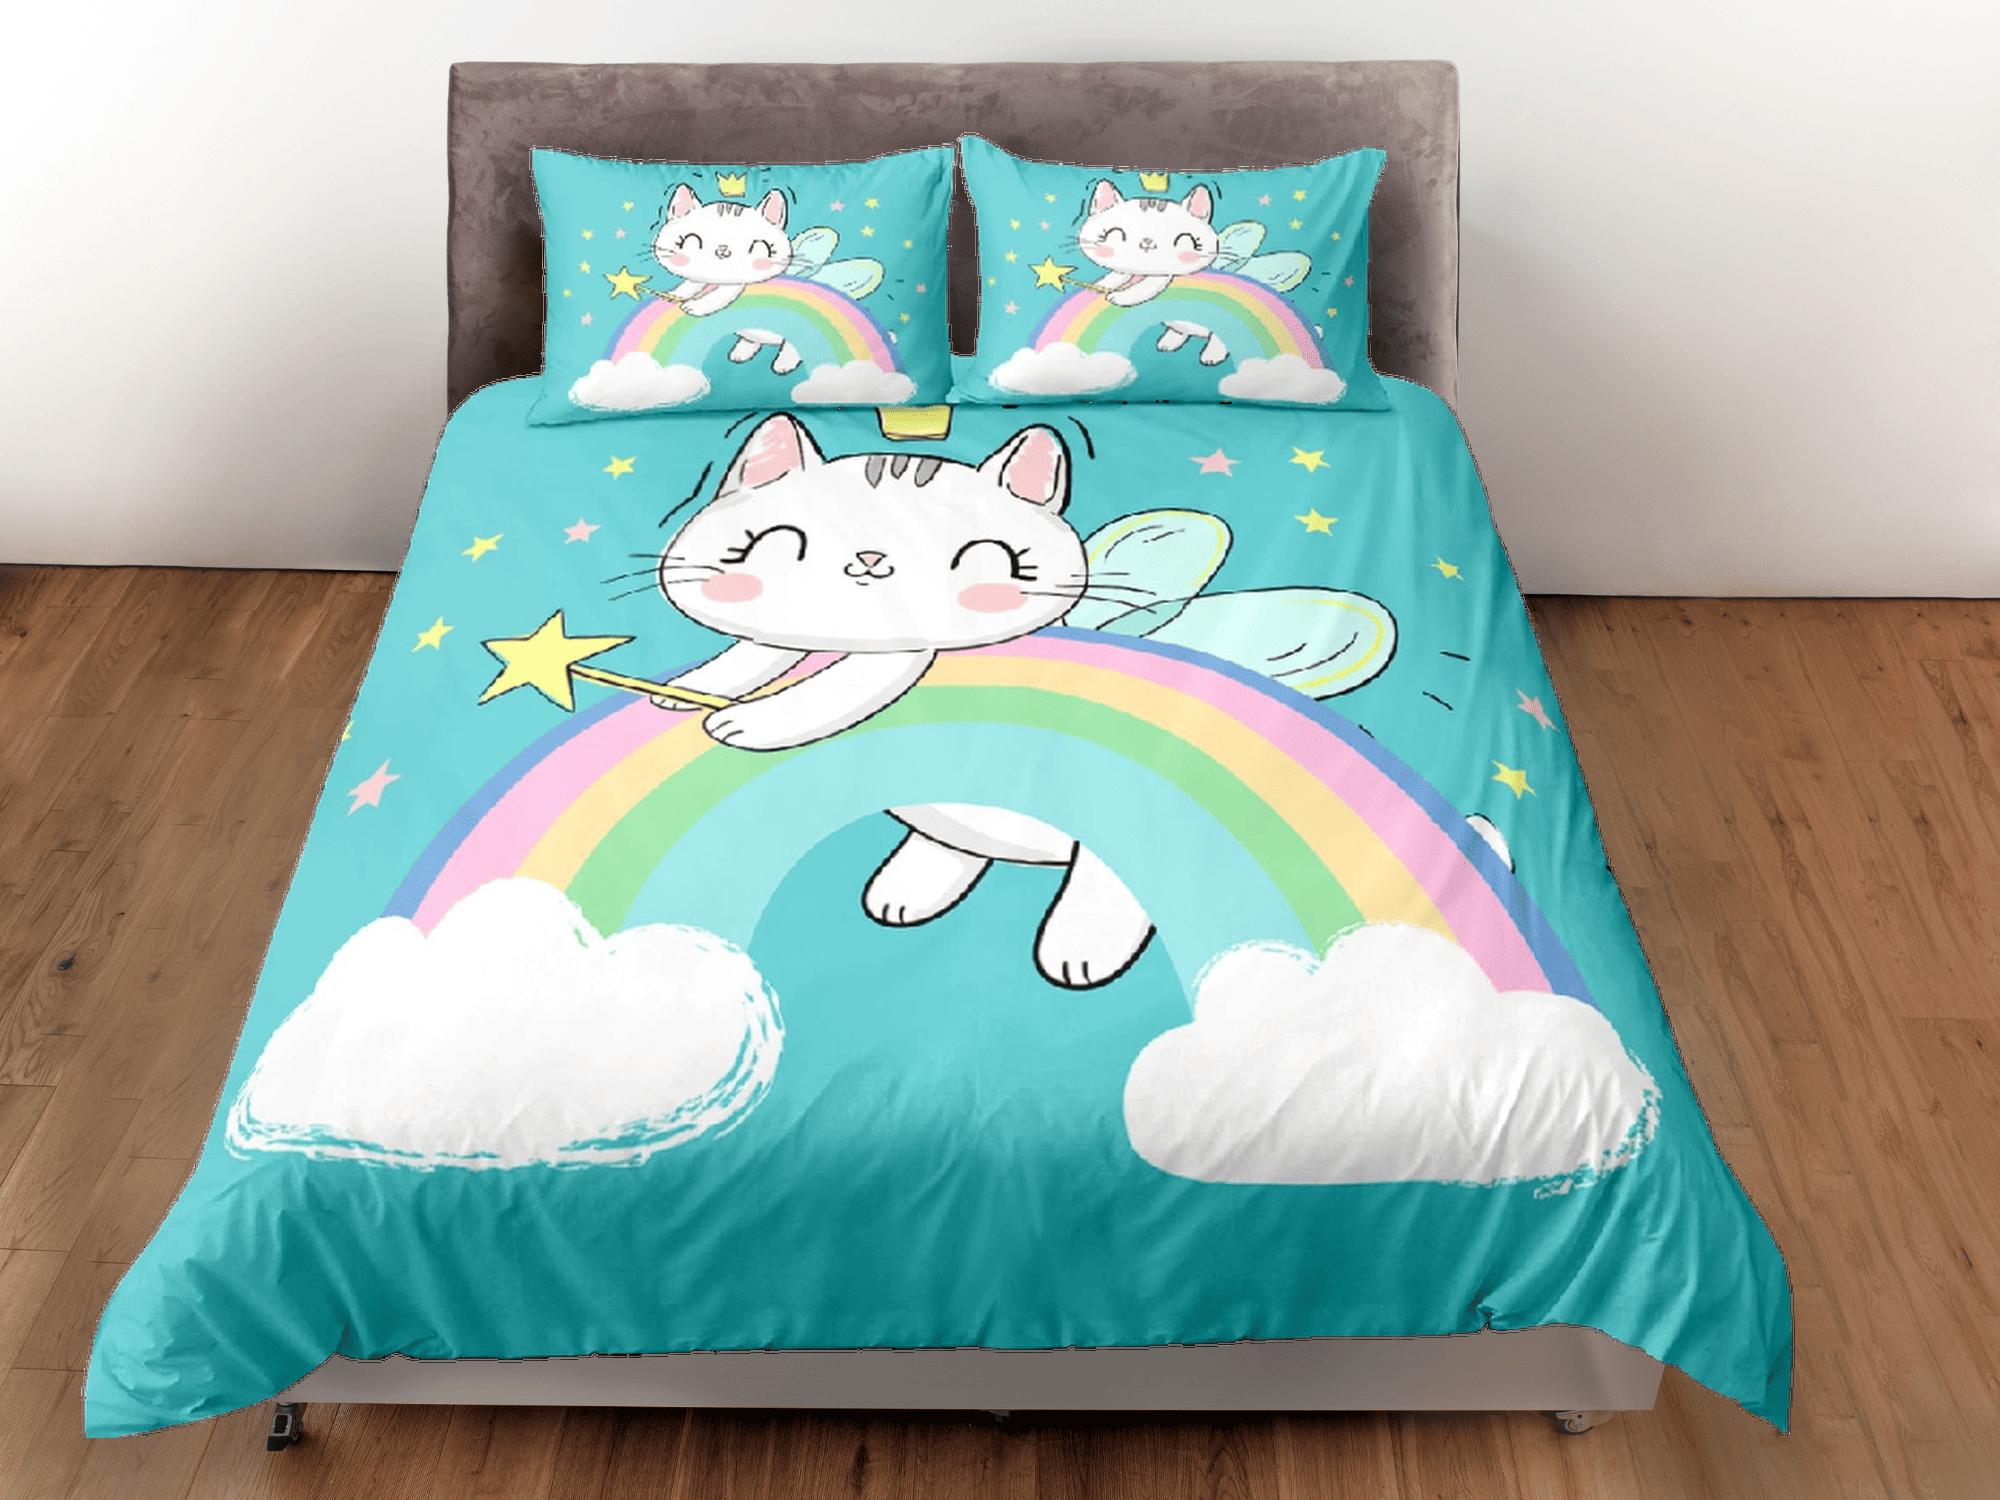 daintyduvet Cat Lover Duvet Cover Bedspread Cute Cat in Rainbow Bedding for Teens Kids Bedroom Comforter Cover